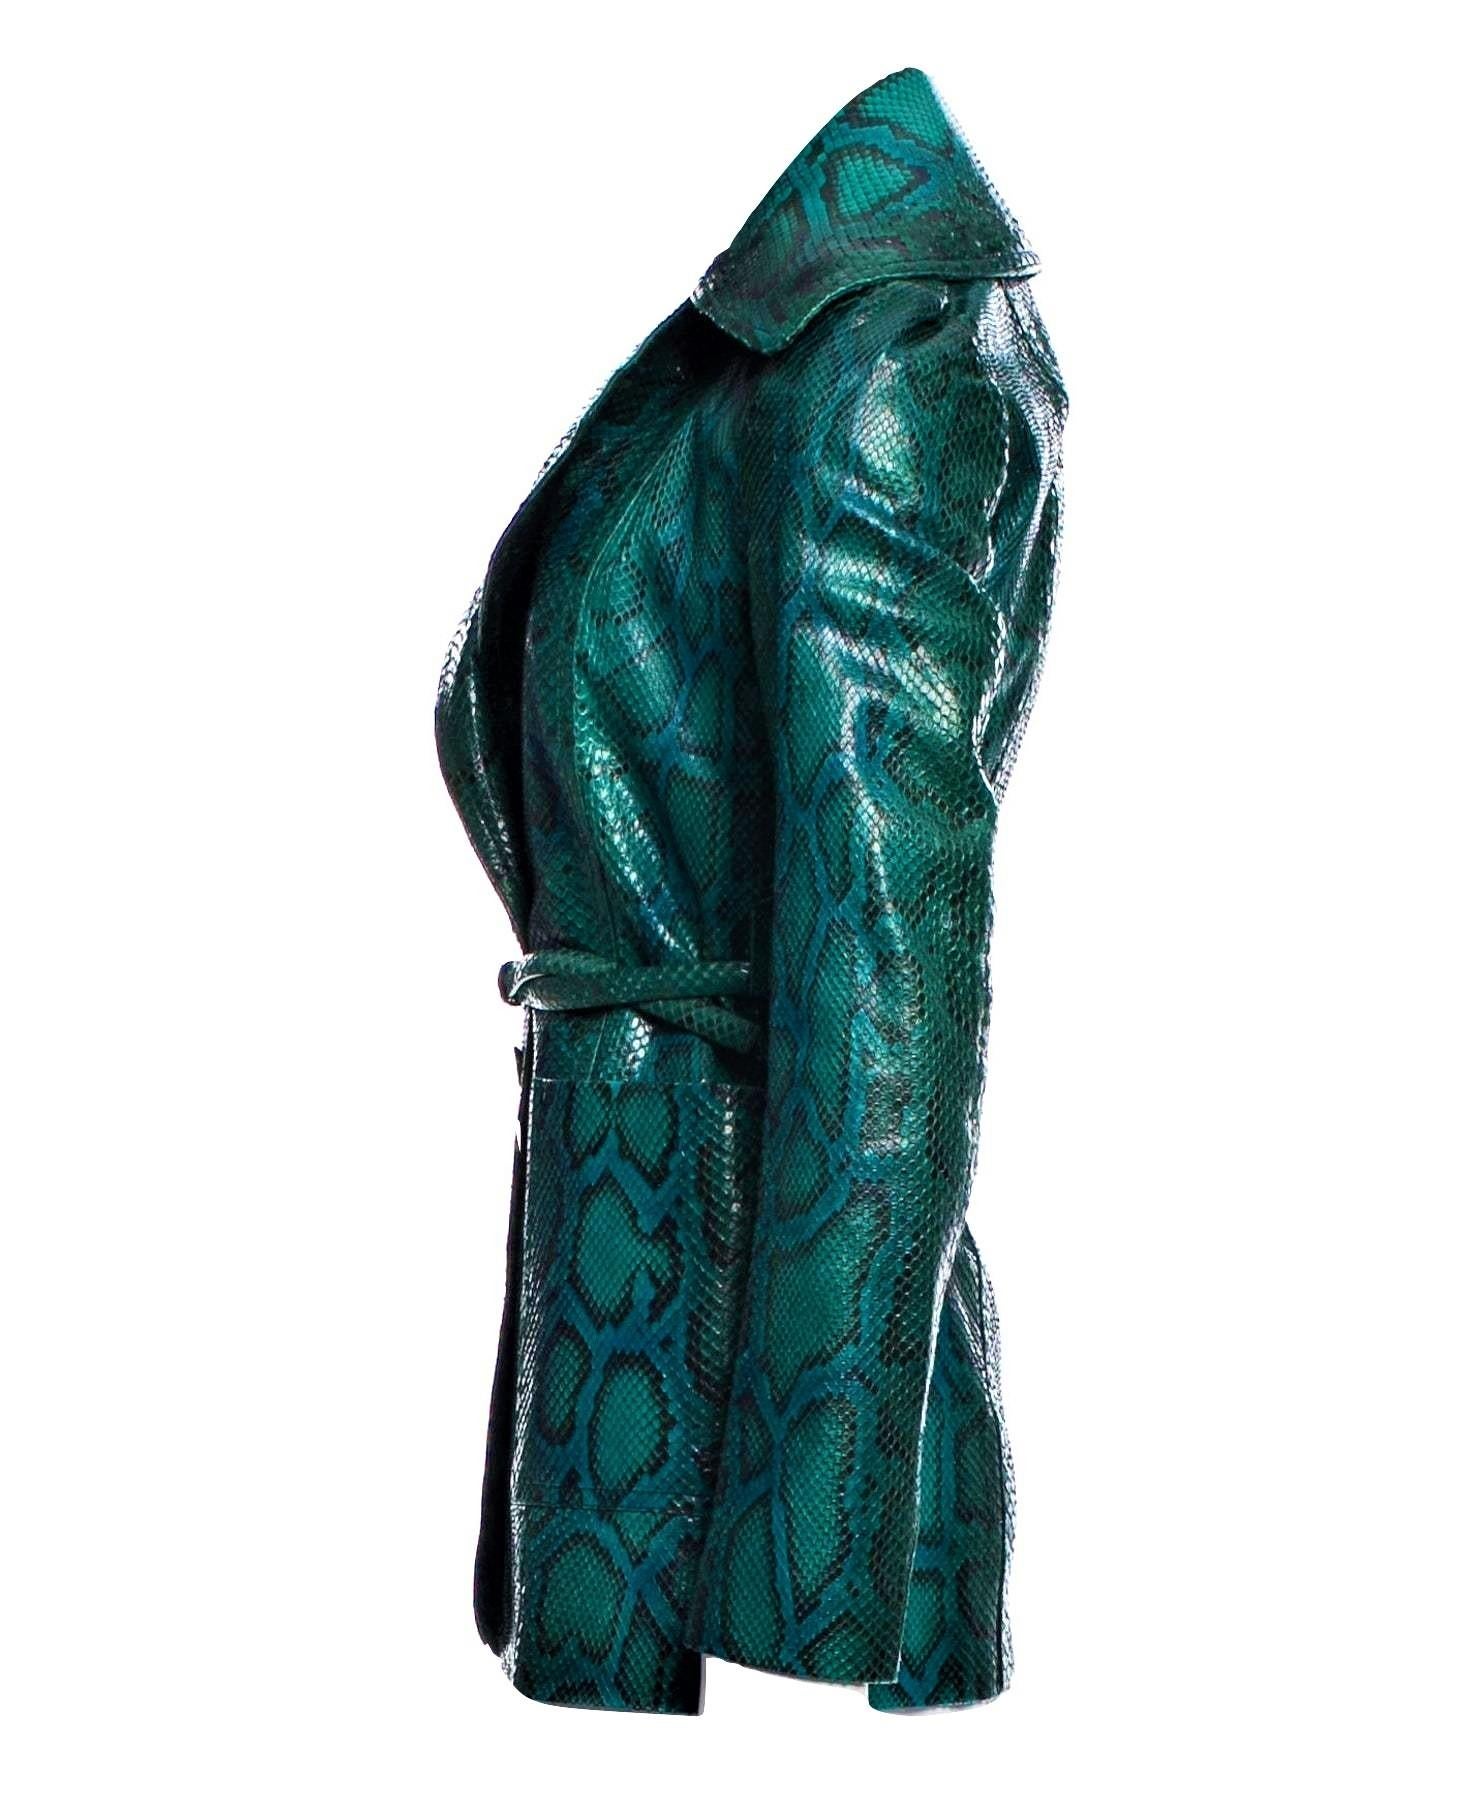 New Rare Gucci 90th Anniversary Python Snakeskin Jacket Coat Blazer $14.650 For Sale 3